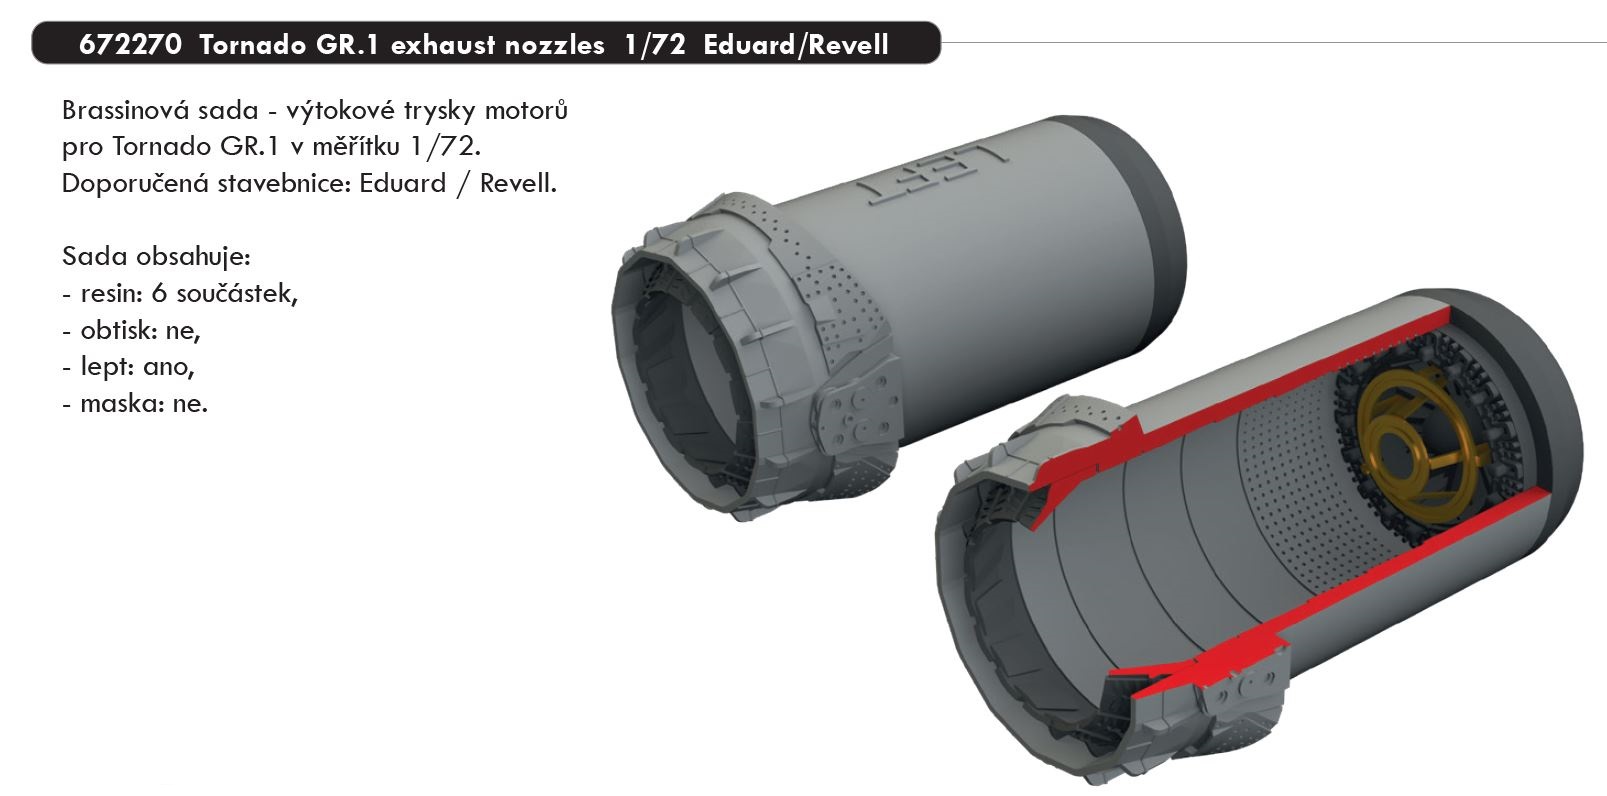 1/72 Tornado GR.1 exhaust nozzles (EDUARD/REVELL)